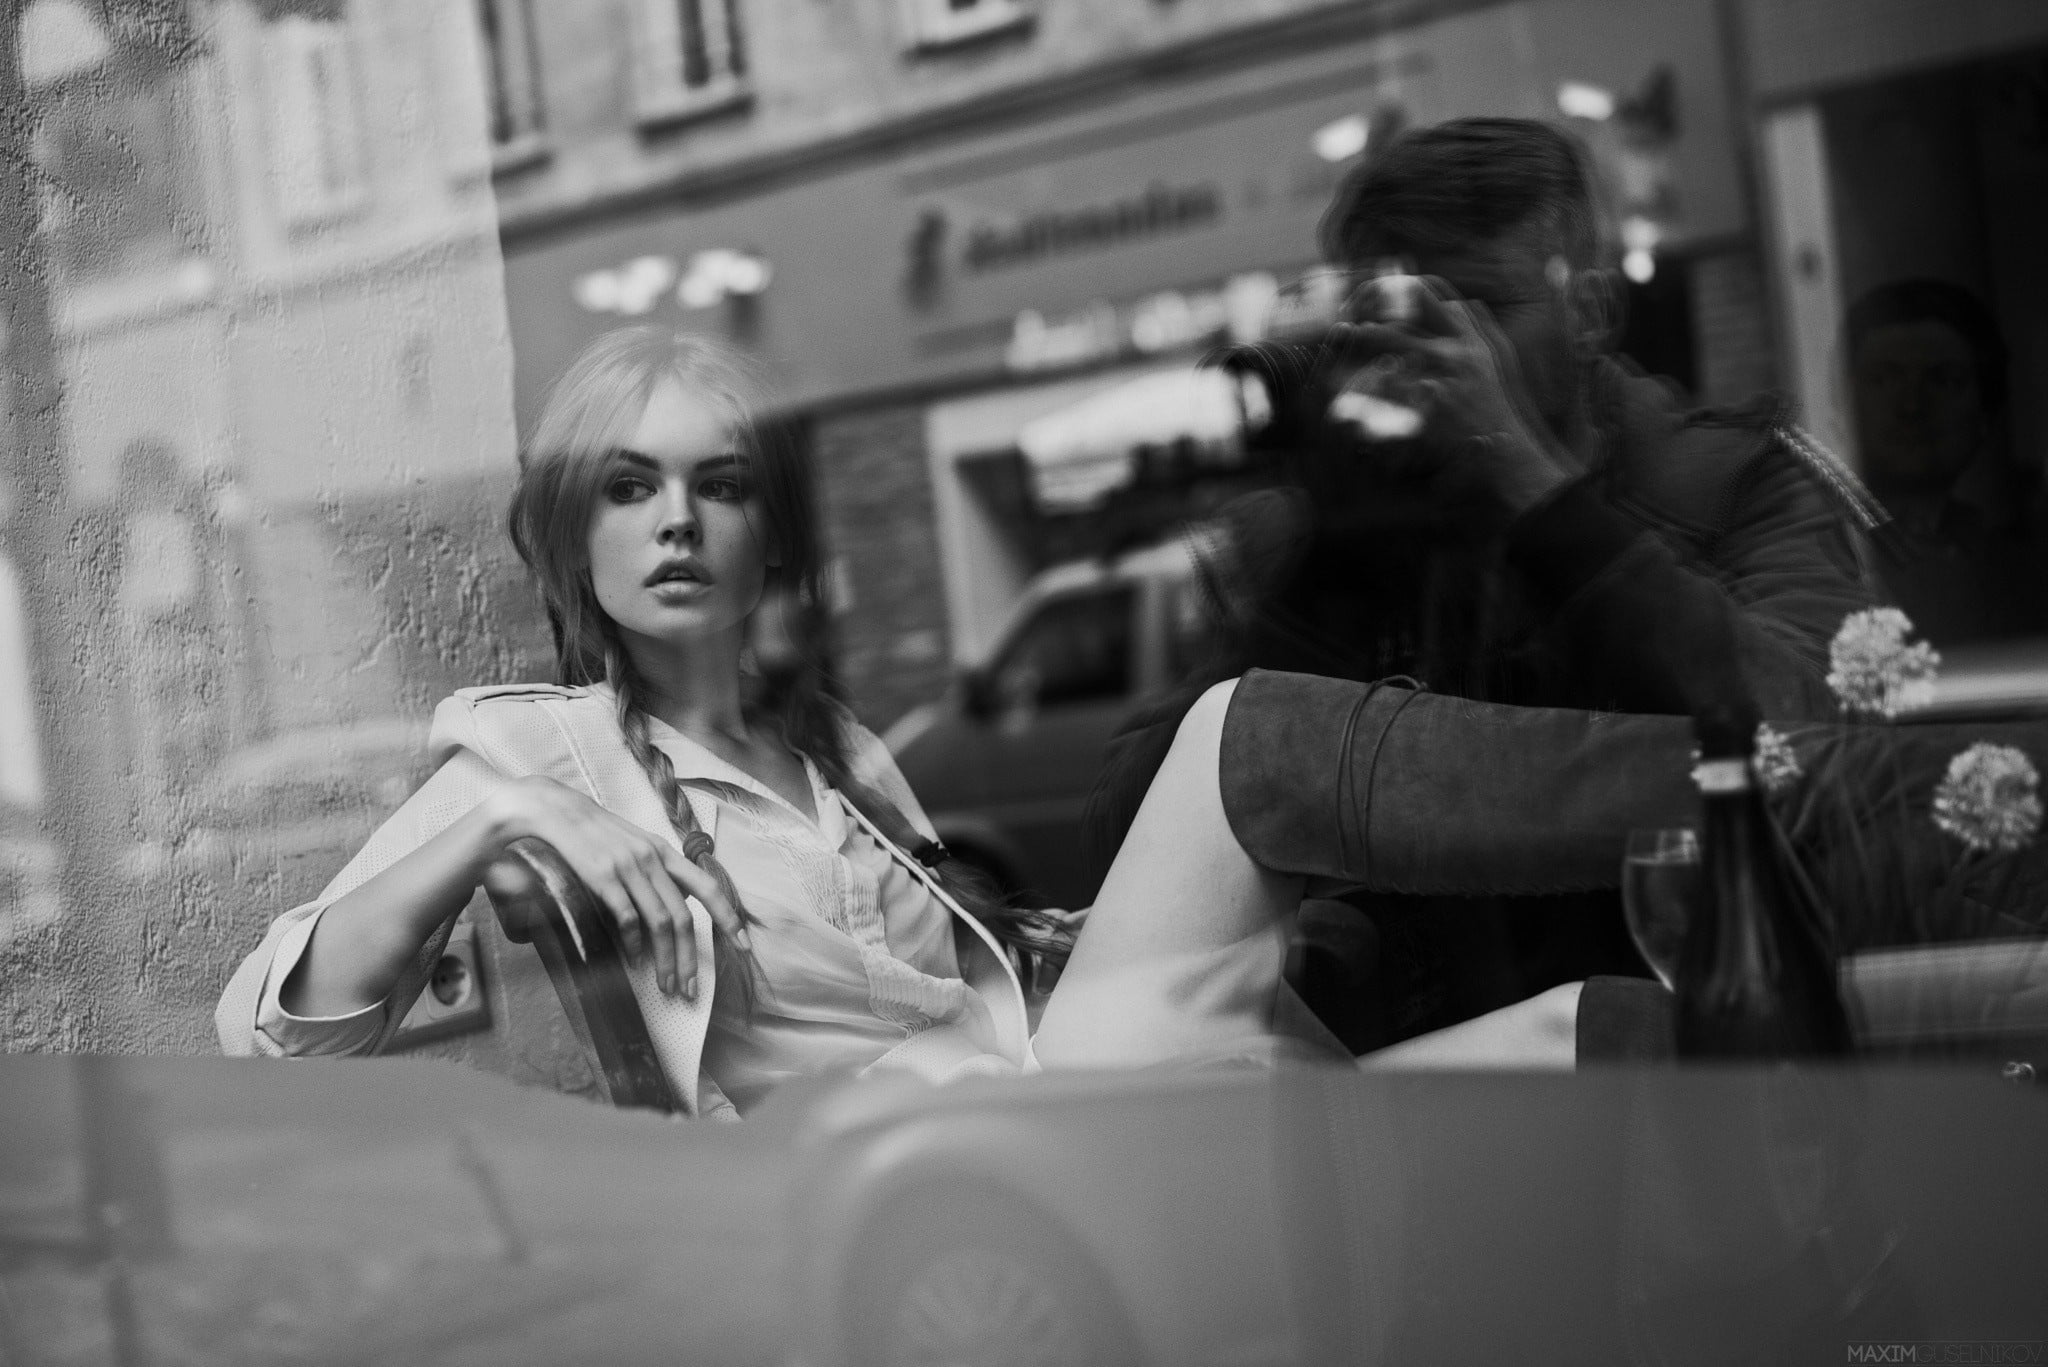 reflection, sweetheart, window, photographer, beauty, cafe